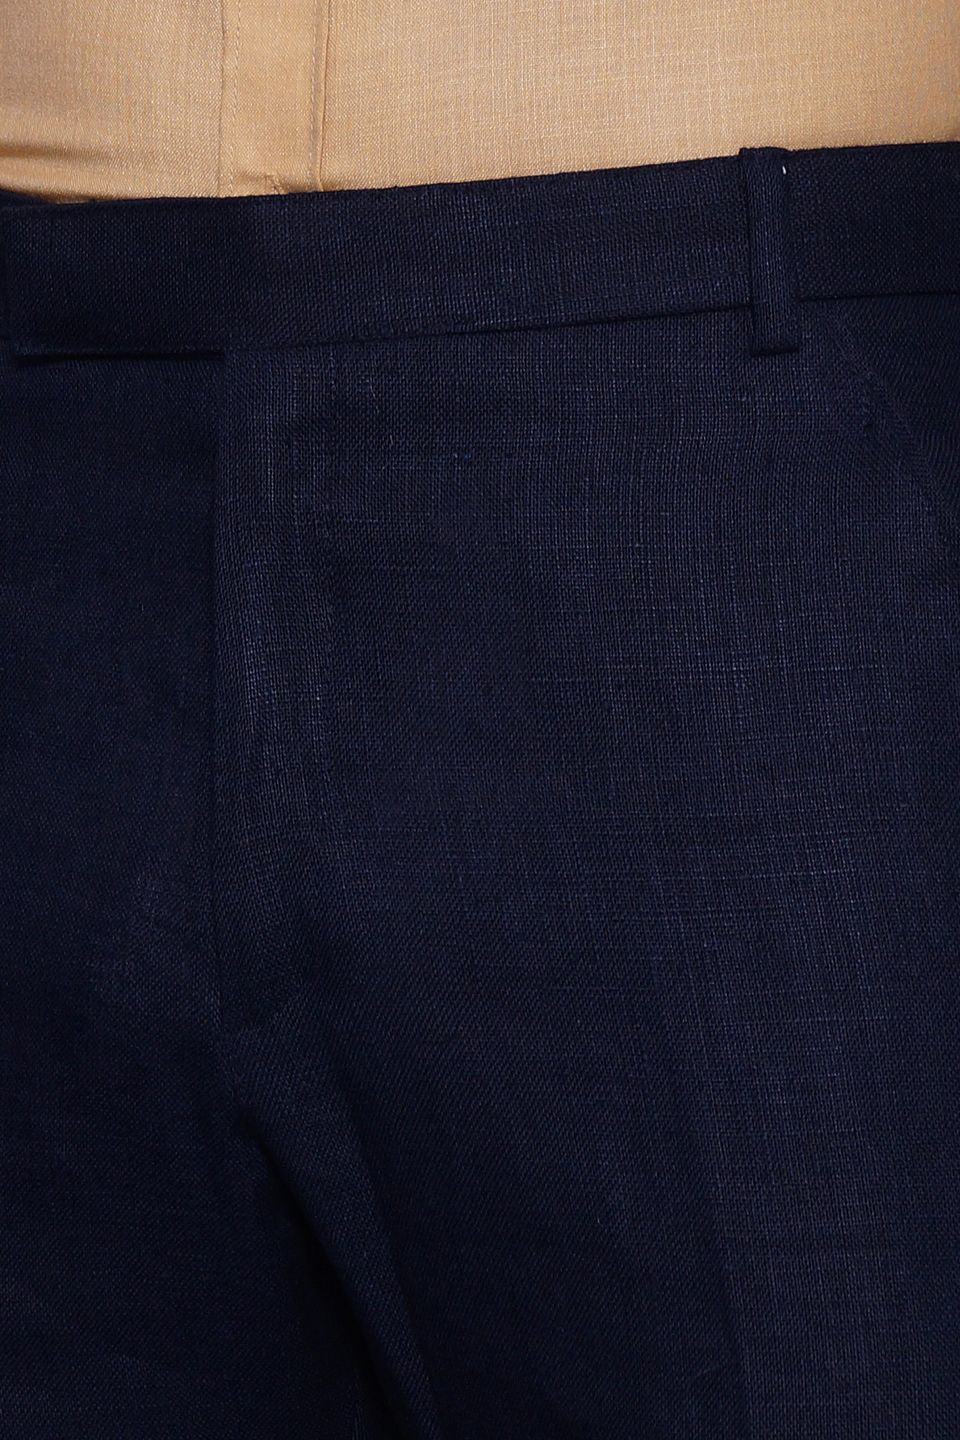 Wintage Men's Blue Regular Fit Pant 100% Linen 